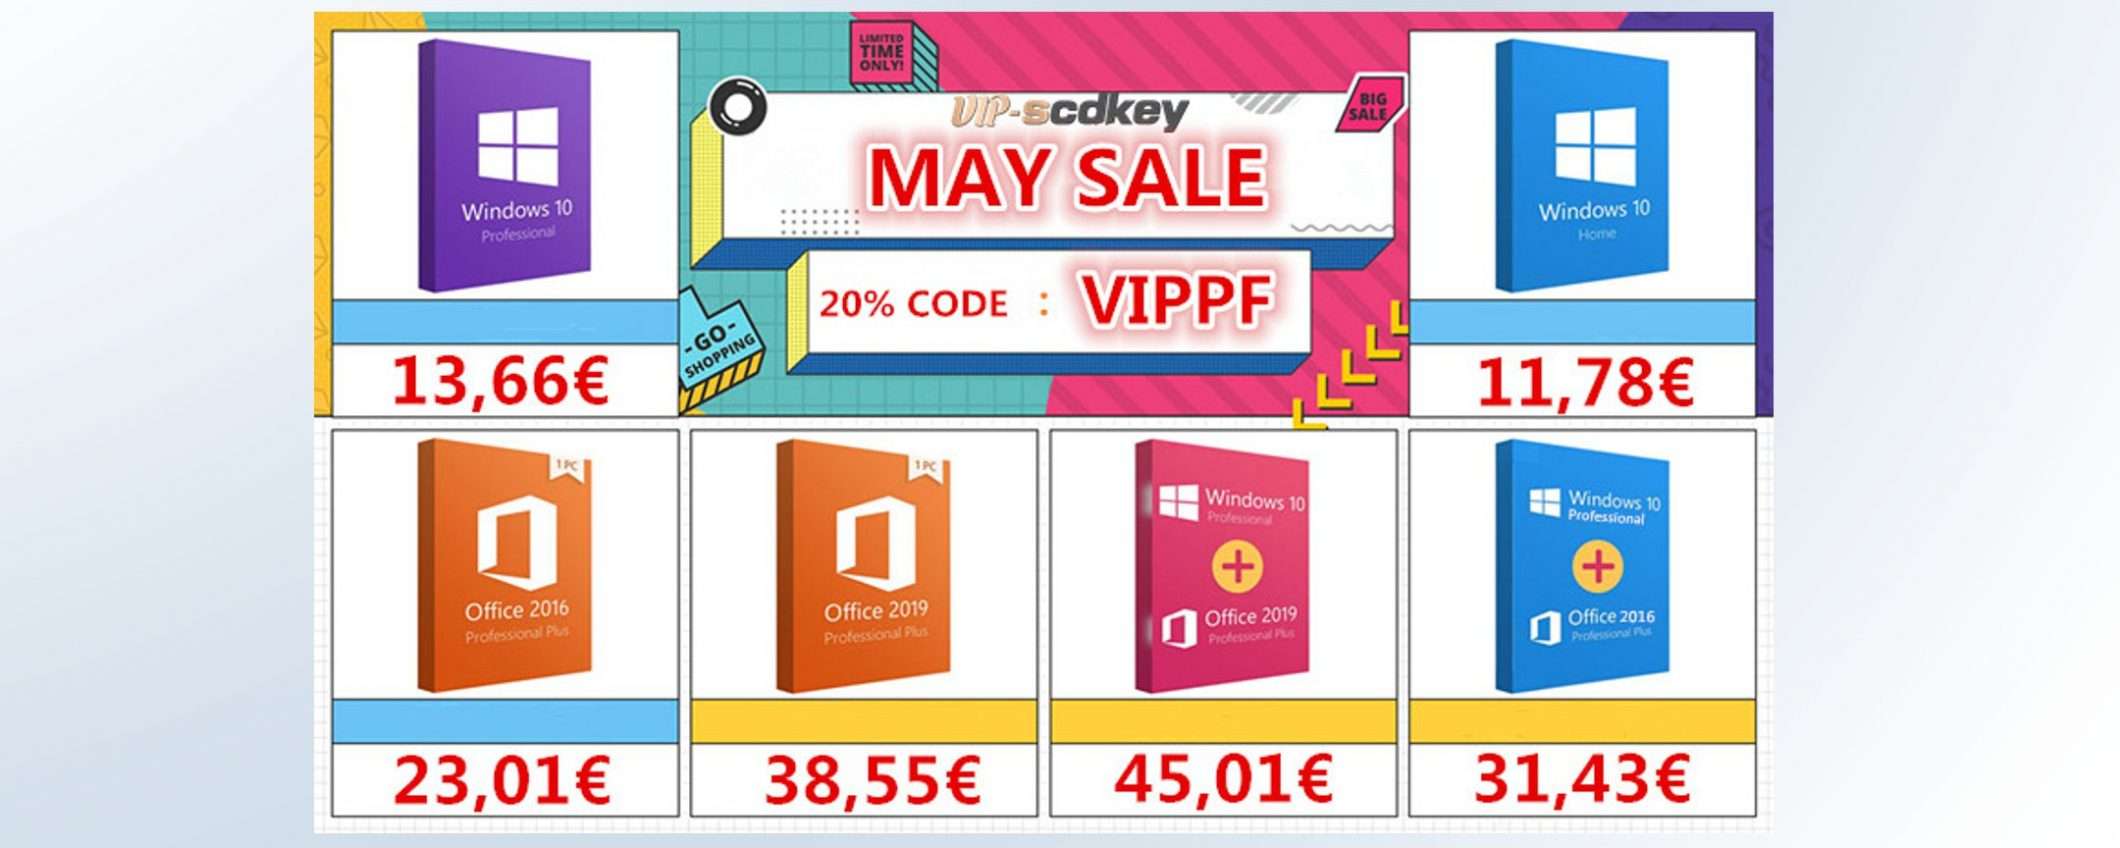 VIP-SCDkey Promo: Windows 10 PRO 13€, Office 2016 23€